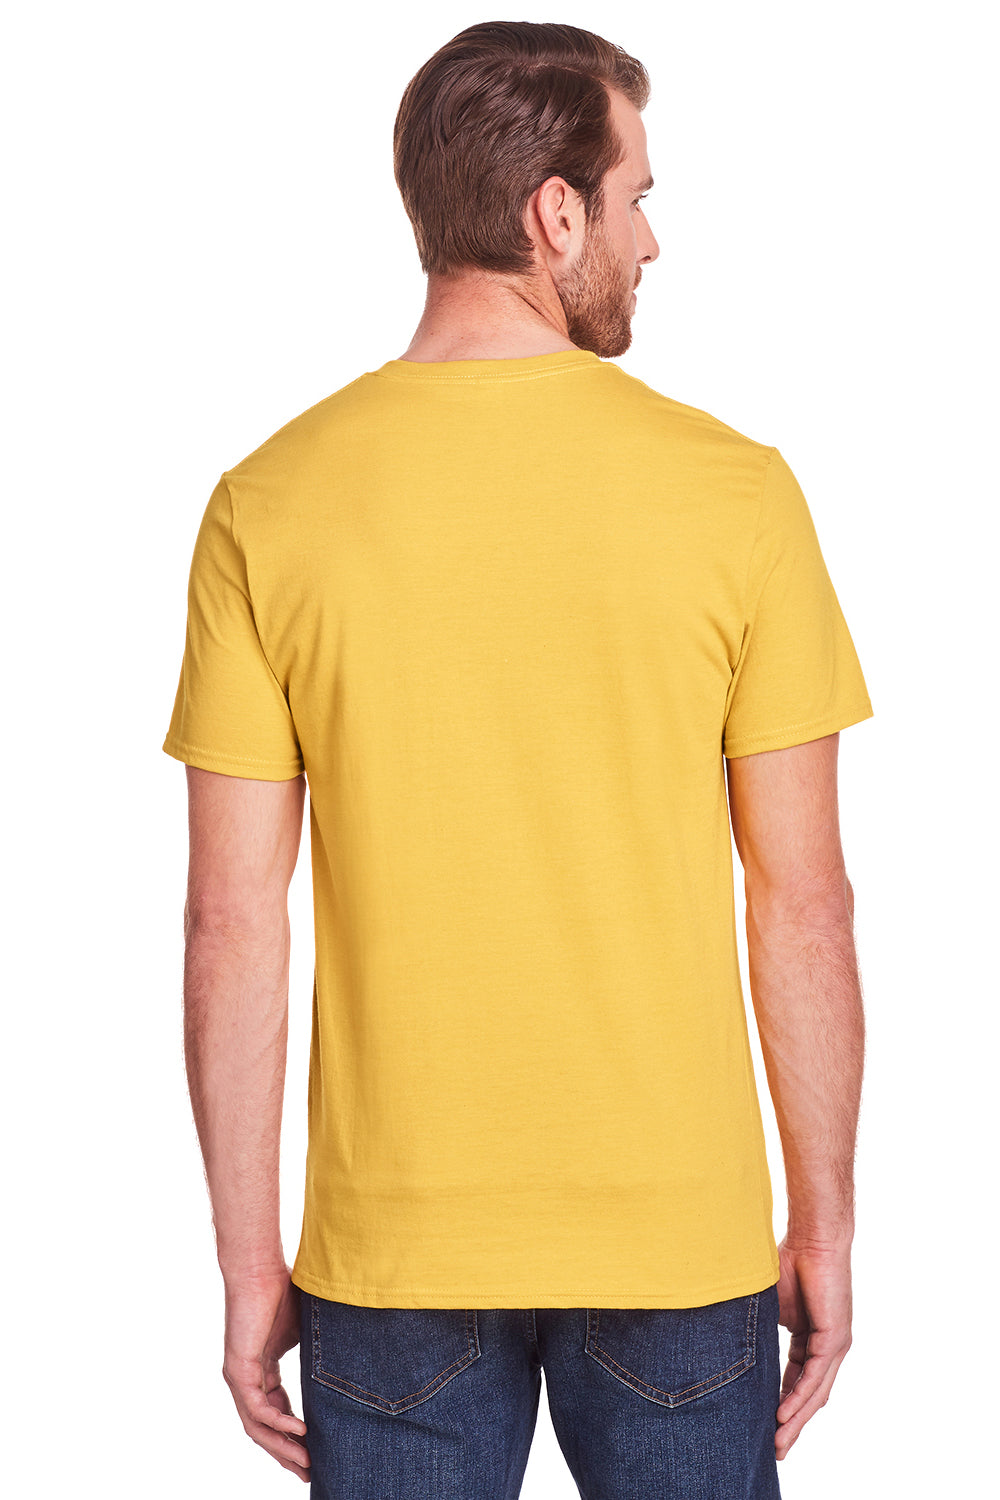 Fruit Of The Loom IC47MR Mens Iconic Short Sleeve Crewneck T-Shirt Heather Mustard Yellow Back